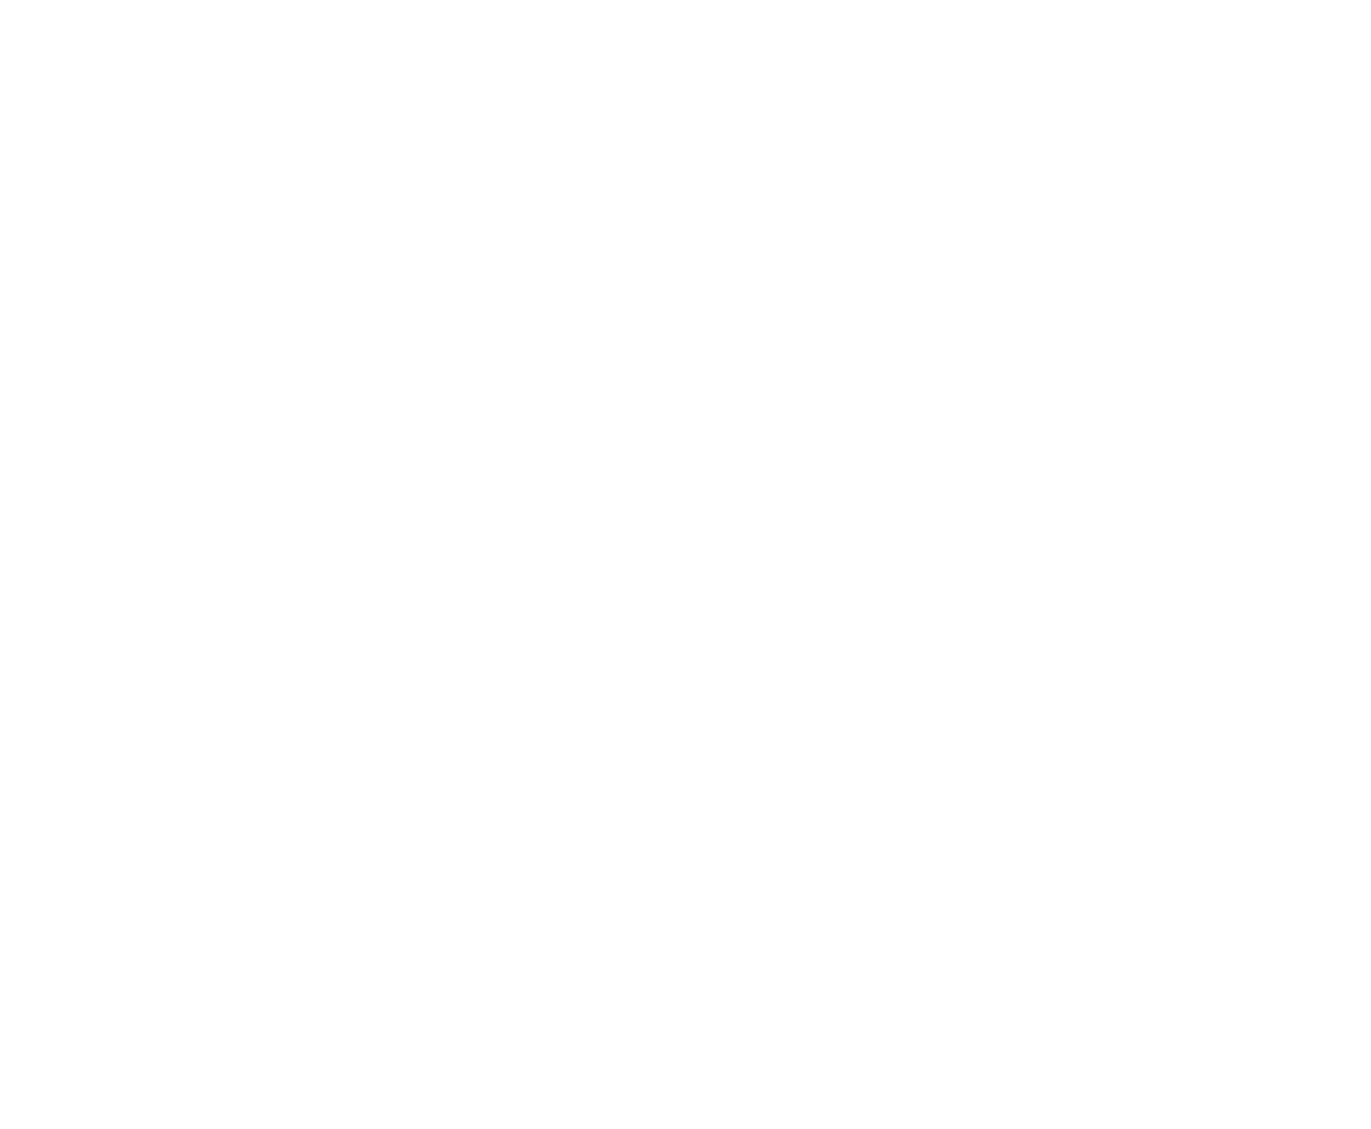 UE_AcademicPartner_New_Logo-Small_White